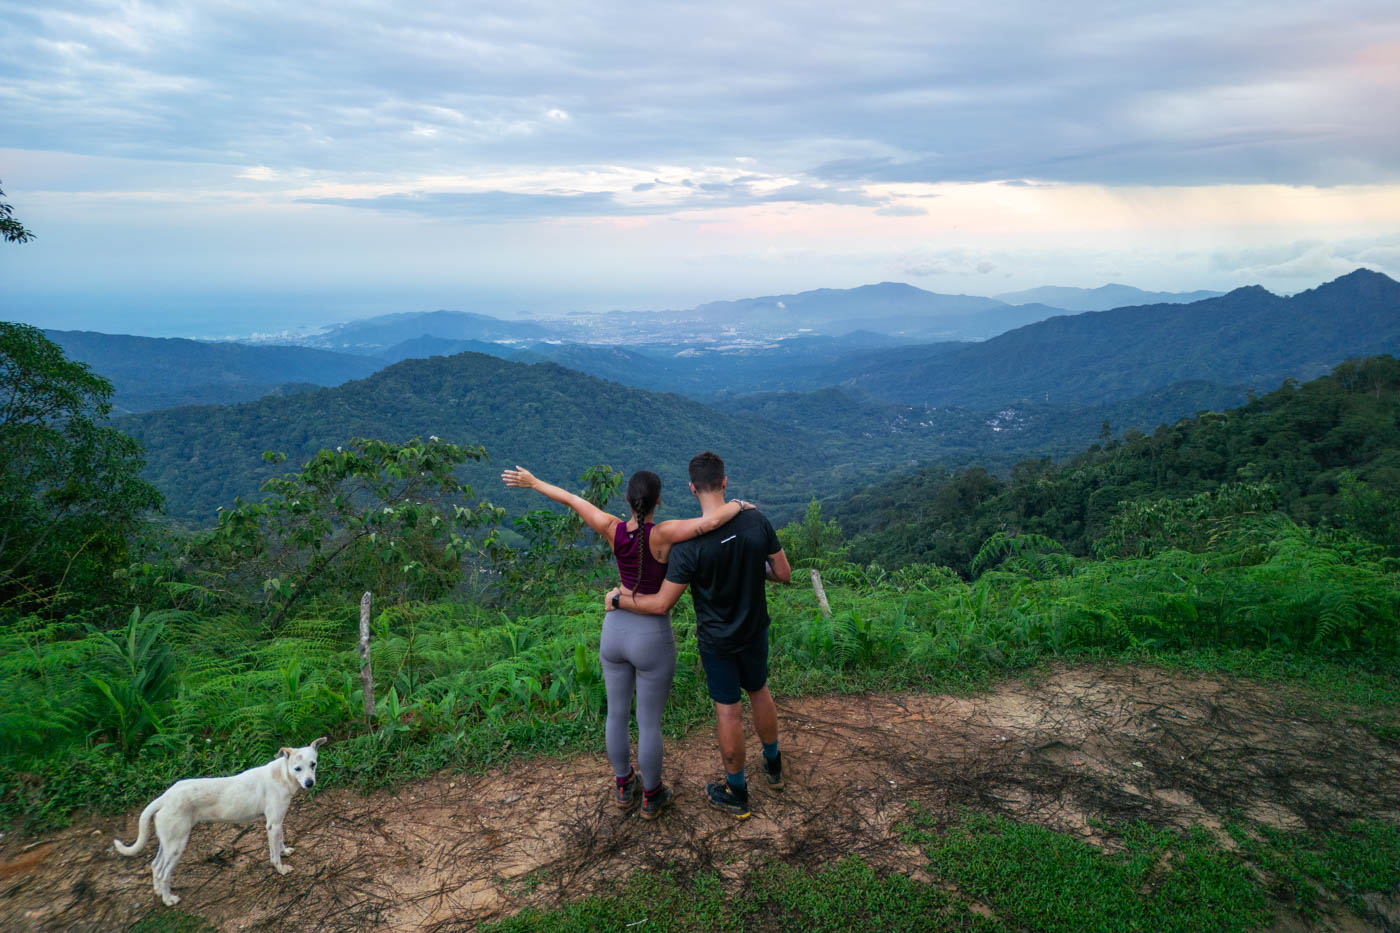 Ryan and Sara hugging while overlooking the mountains and Santa Marta from Los Pinos viewpoint.